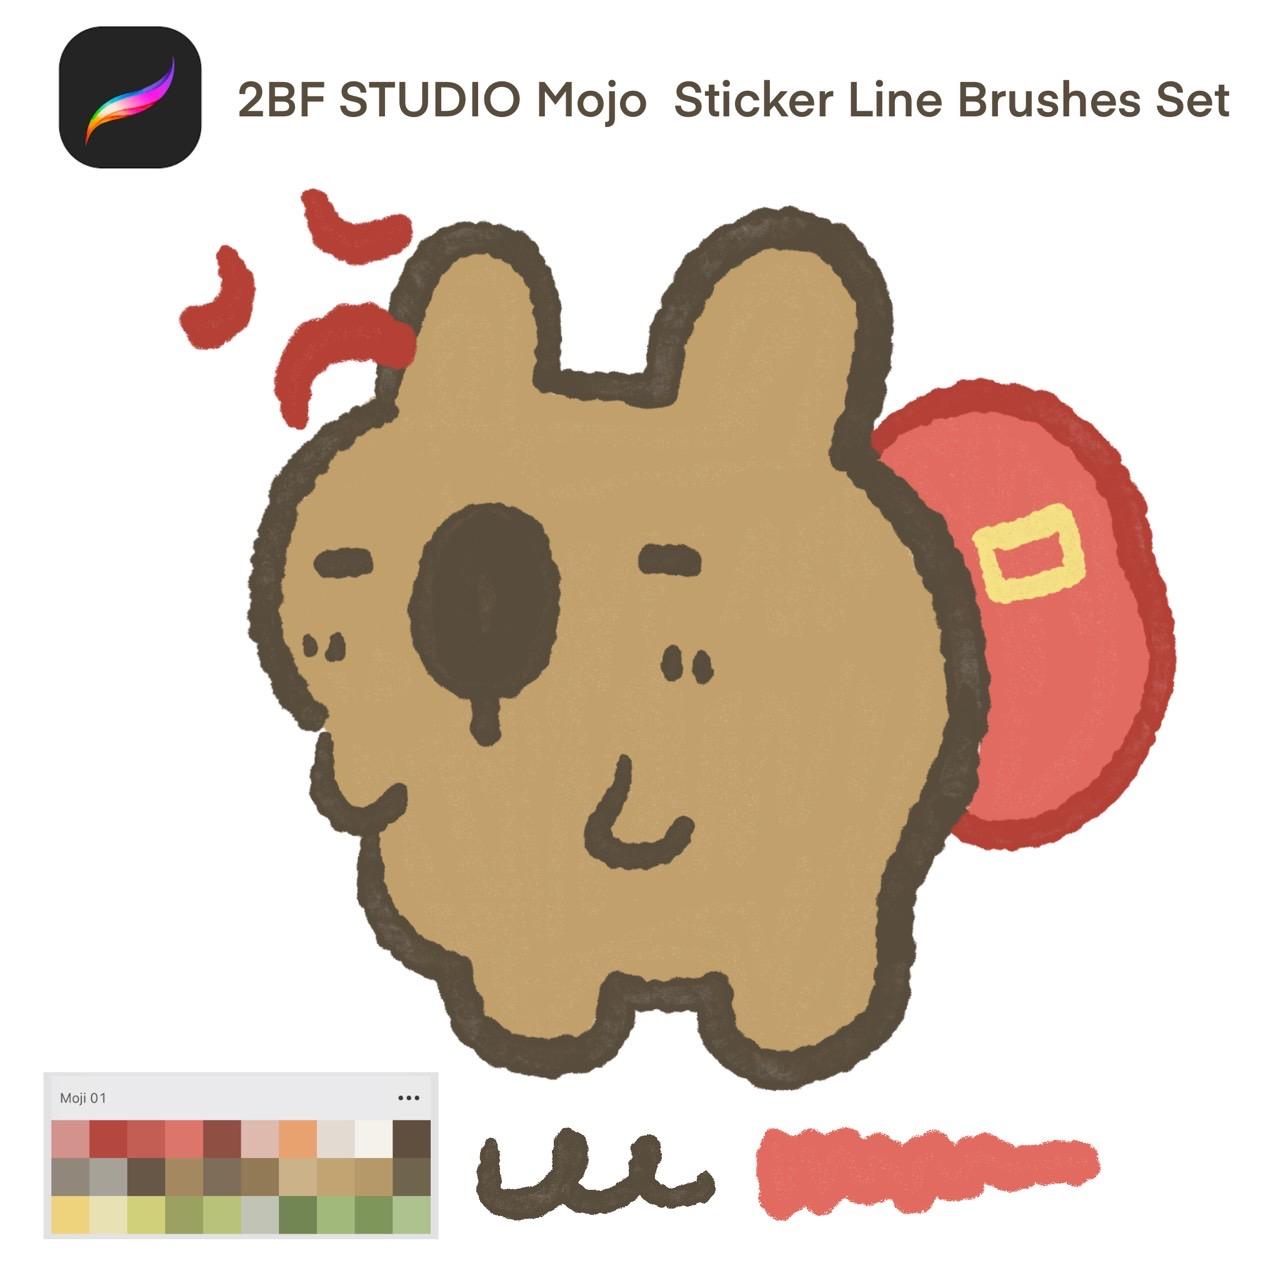 2BF STUDIO Mojo Sticker Line Brushes Set